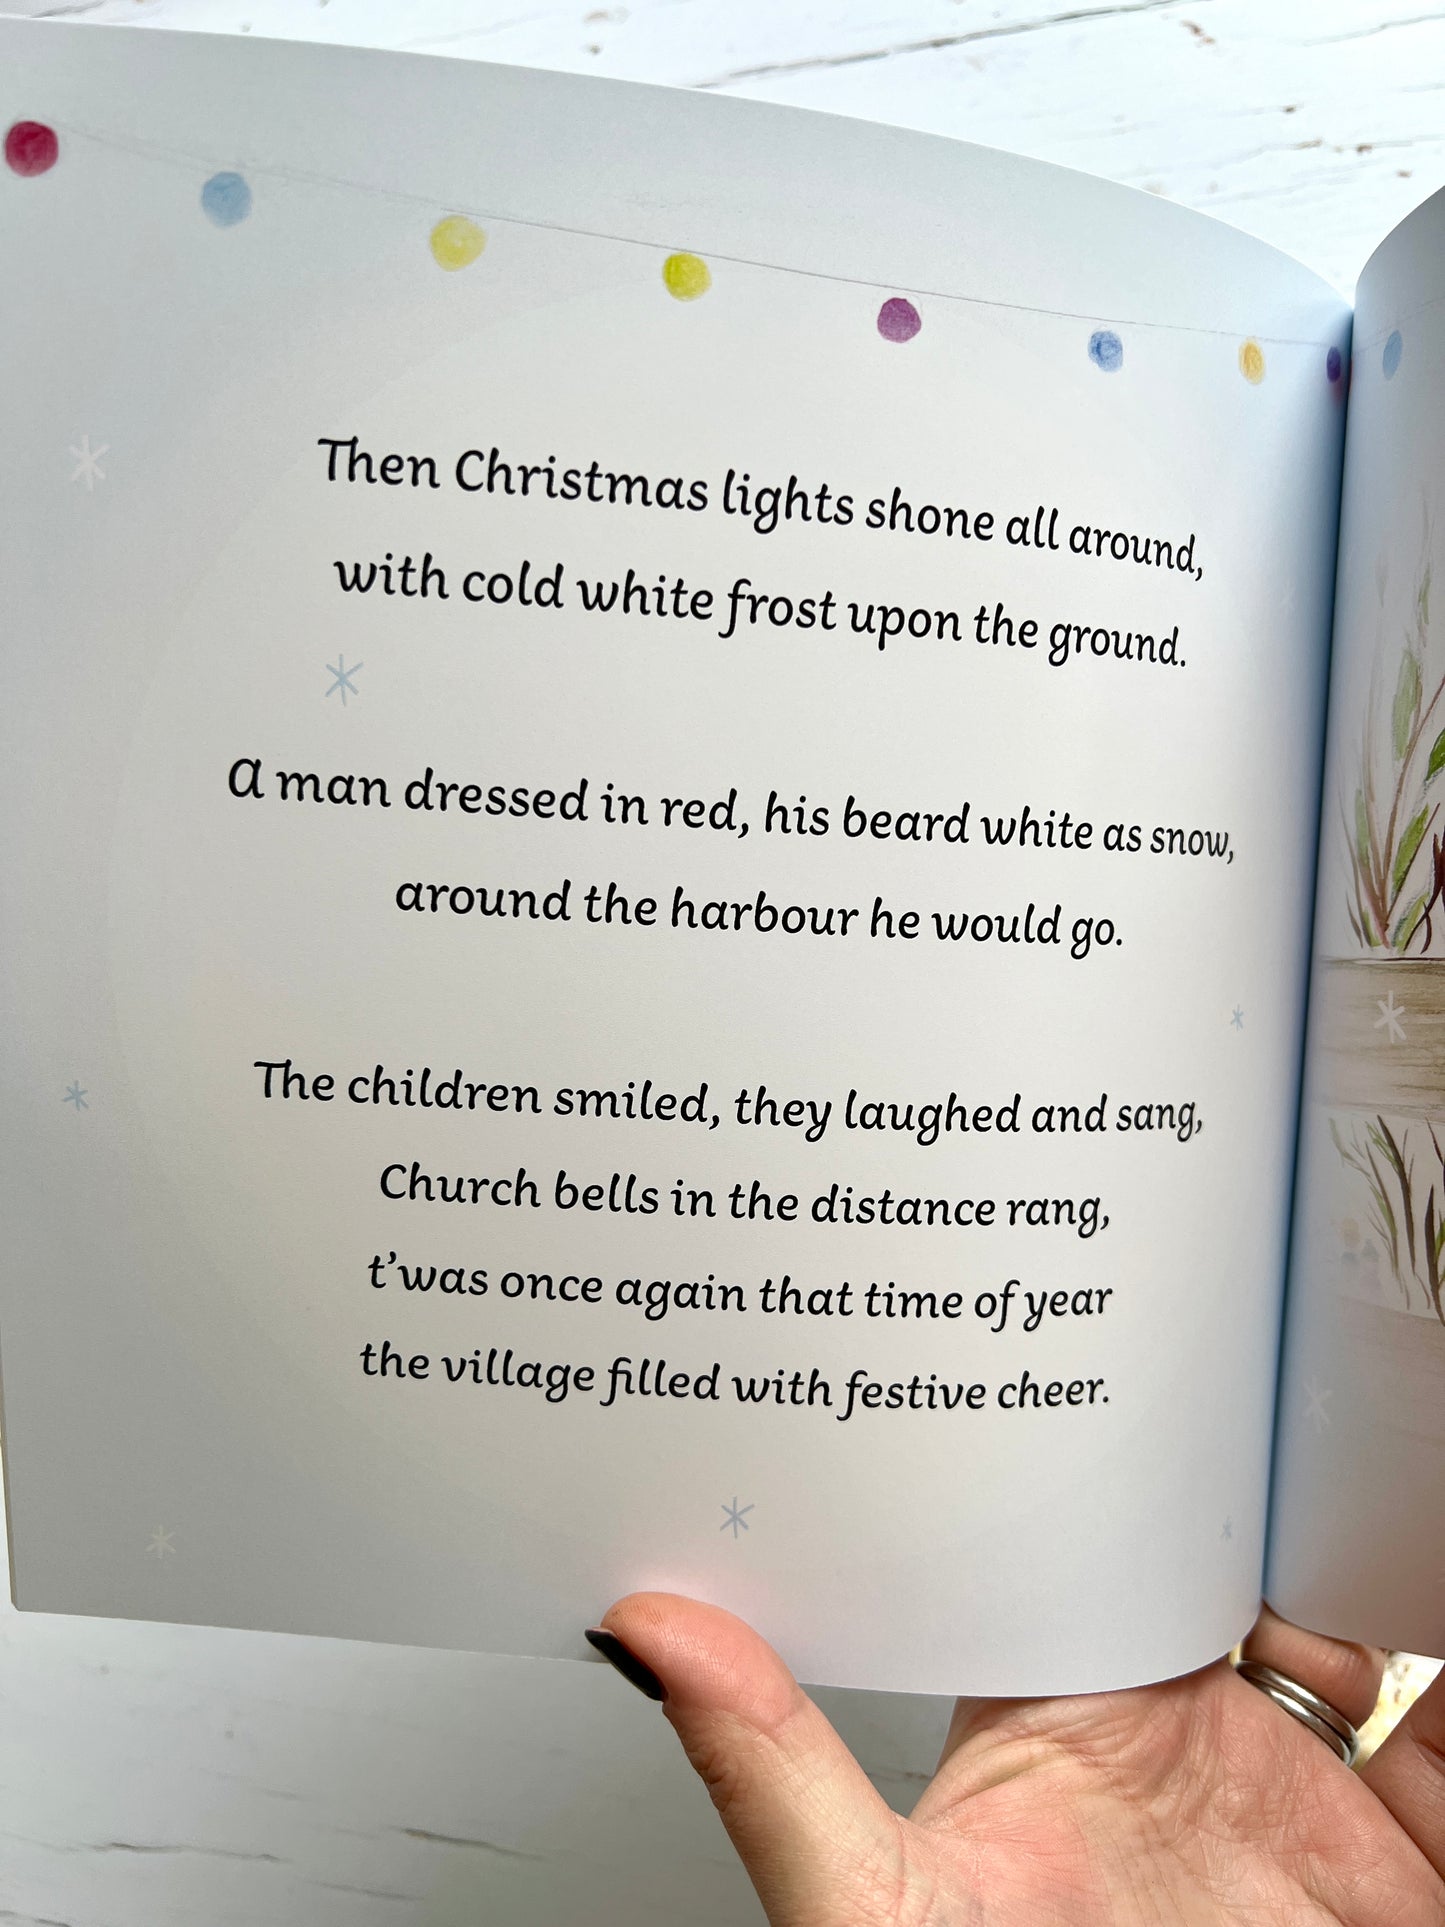 The Charlestown Robin, a children's storybook